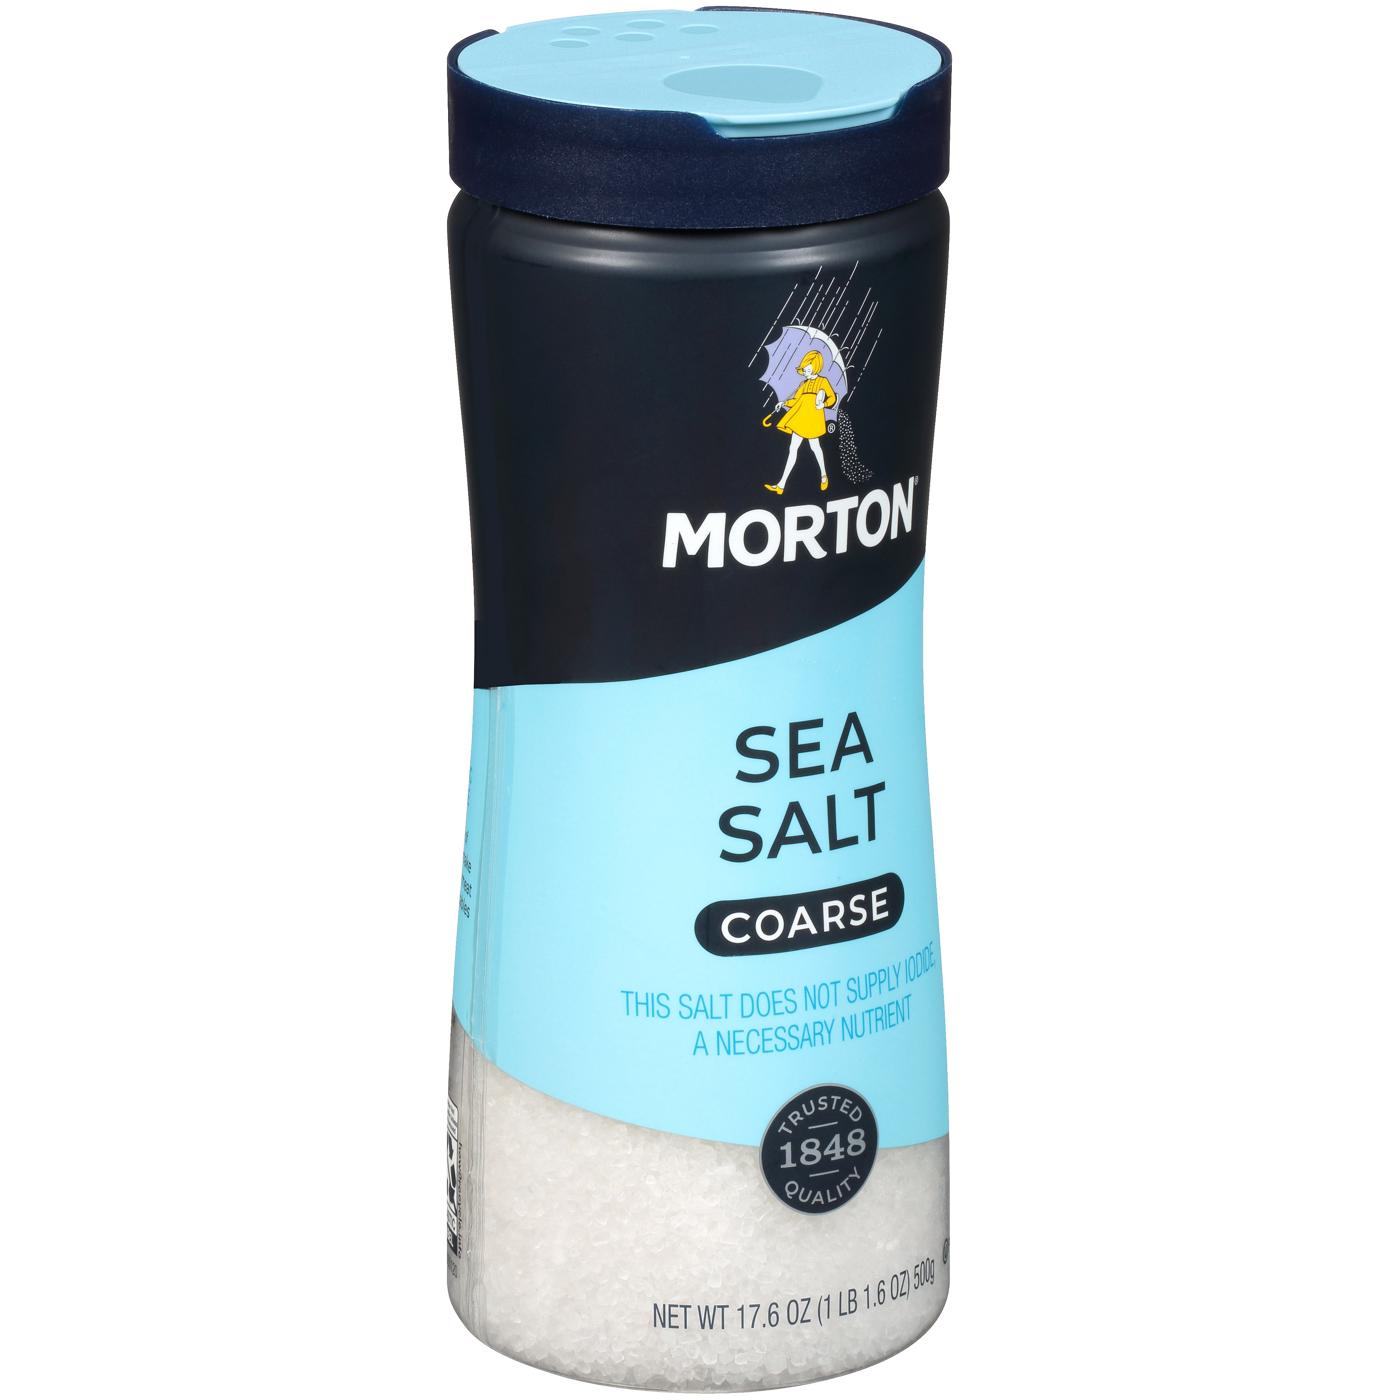 Morton Coarse Sea Salt; image 4 of 8